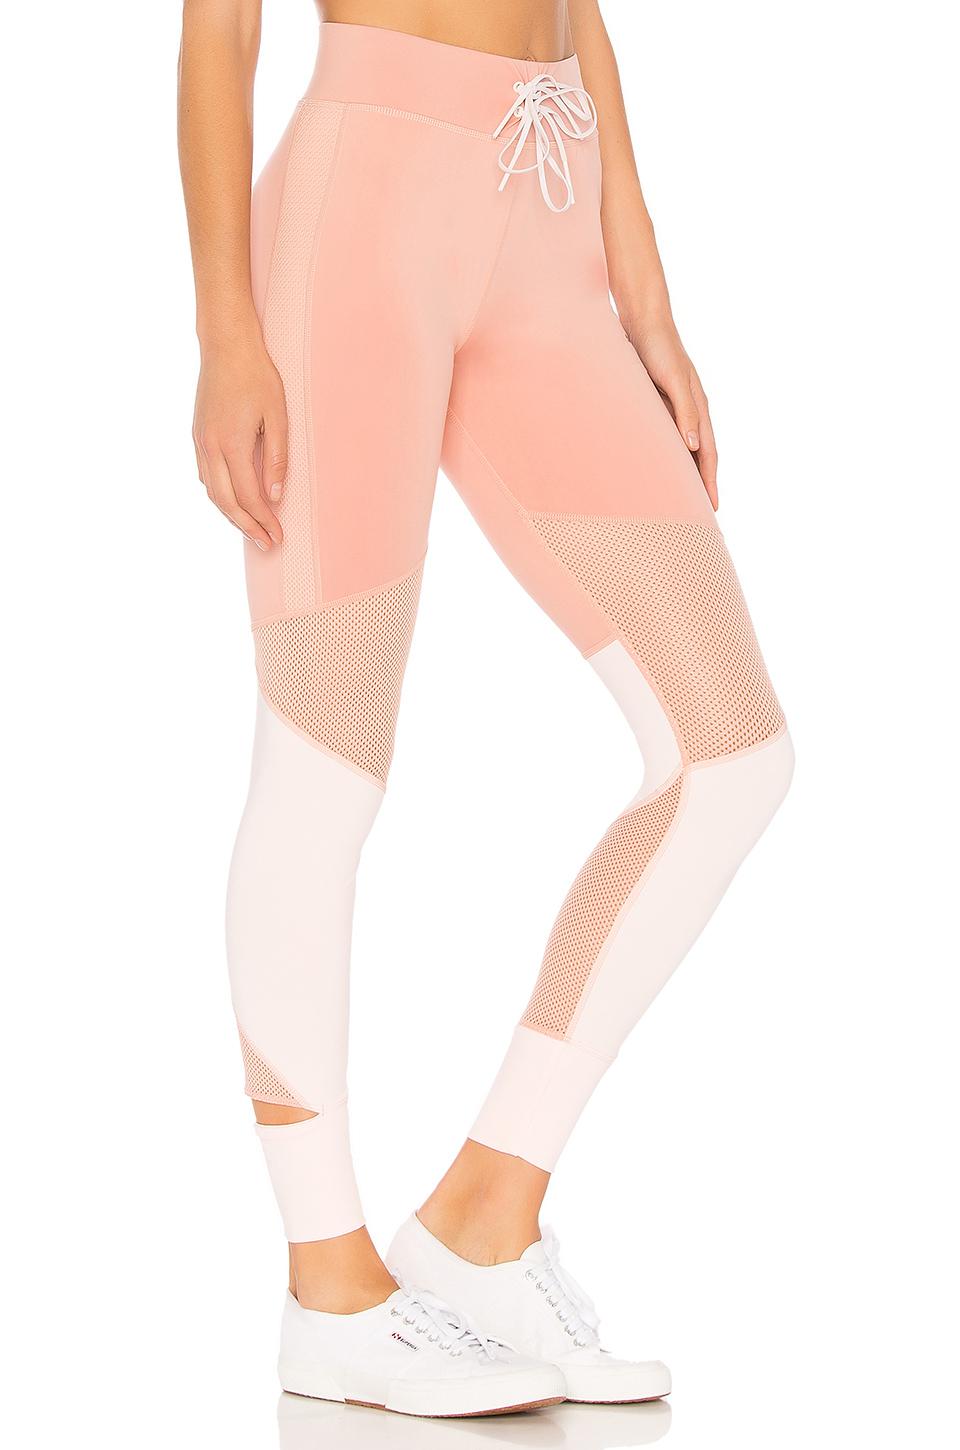 PUMA Synthetic En Pointe Legging in Pink - Lyst